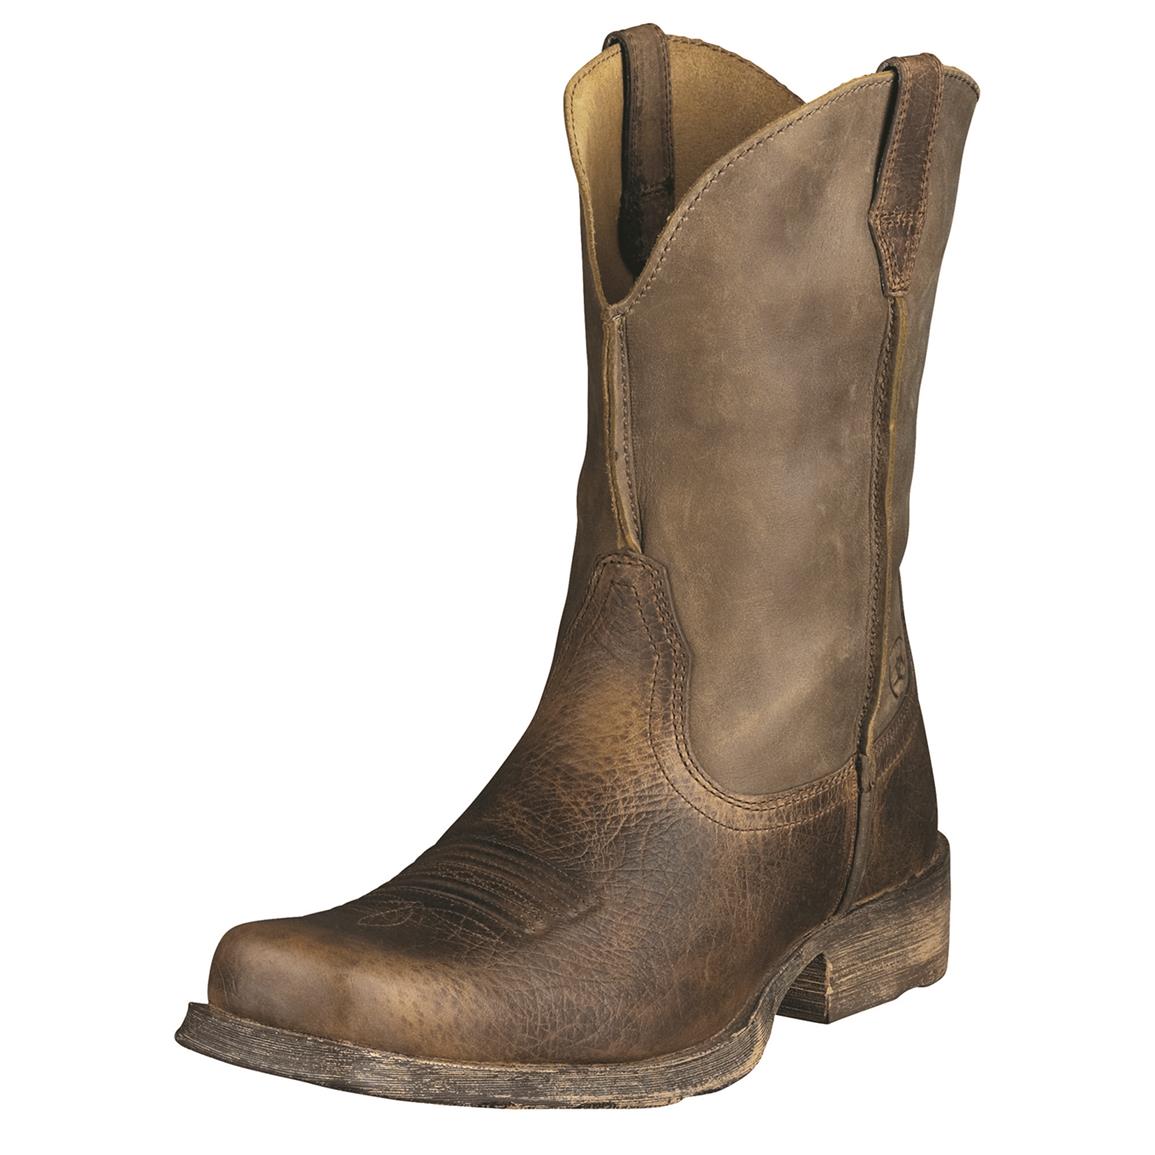 Ariat Men's Rambler Western Boots, Earth/Brown Bomber